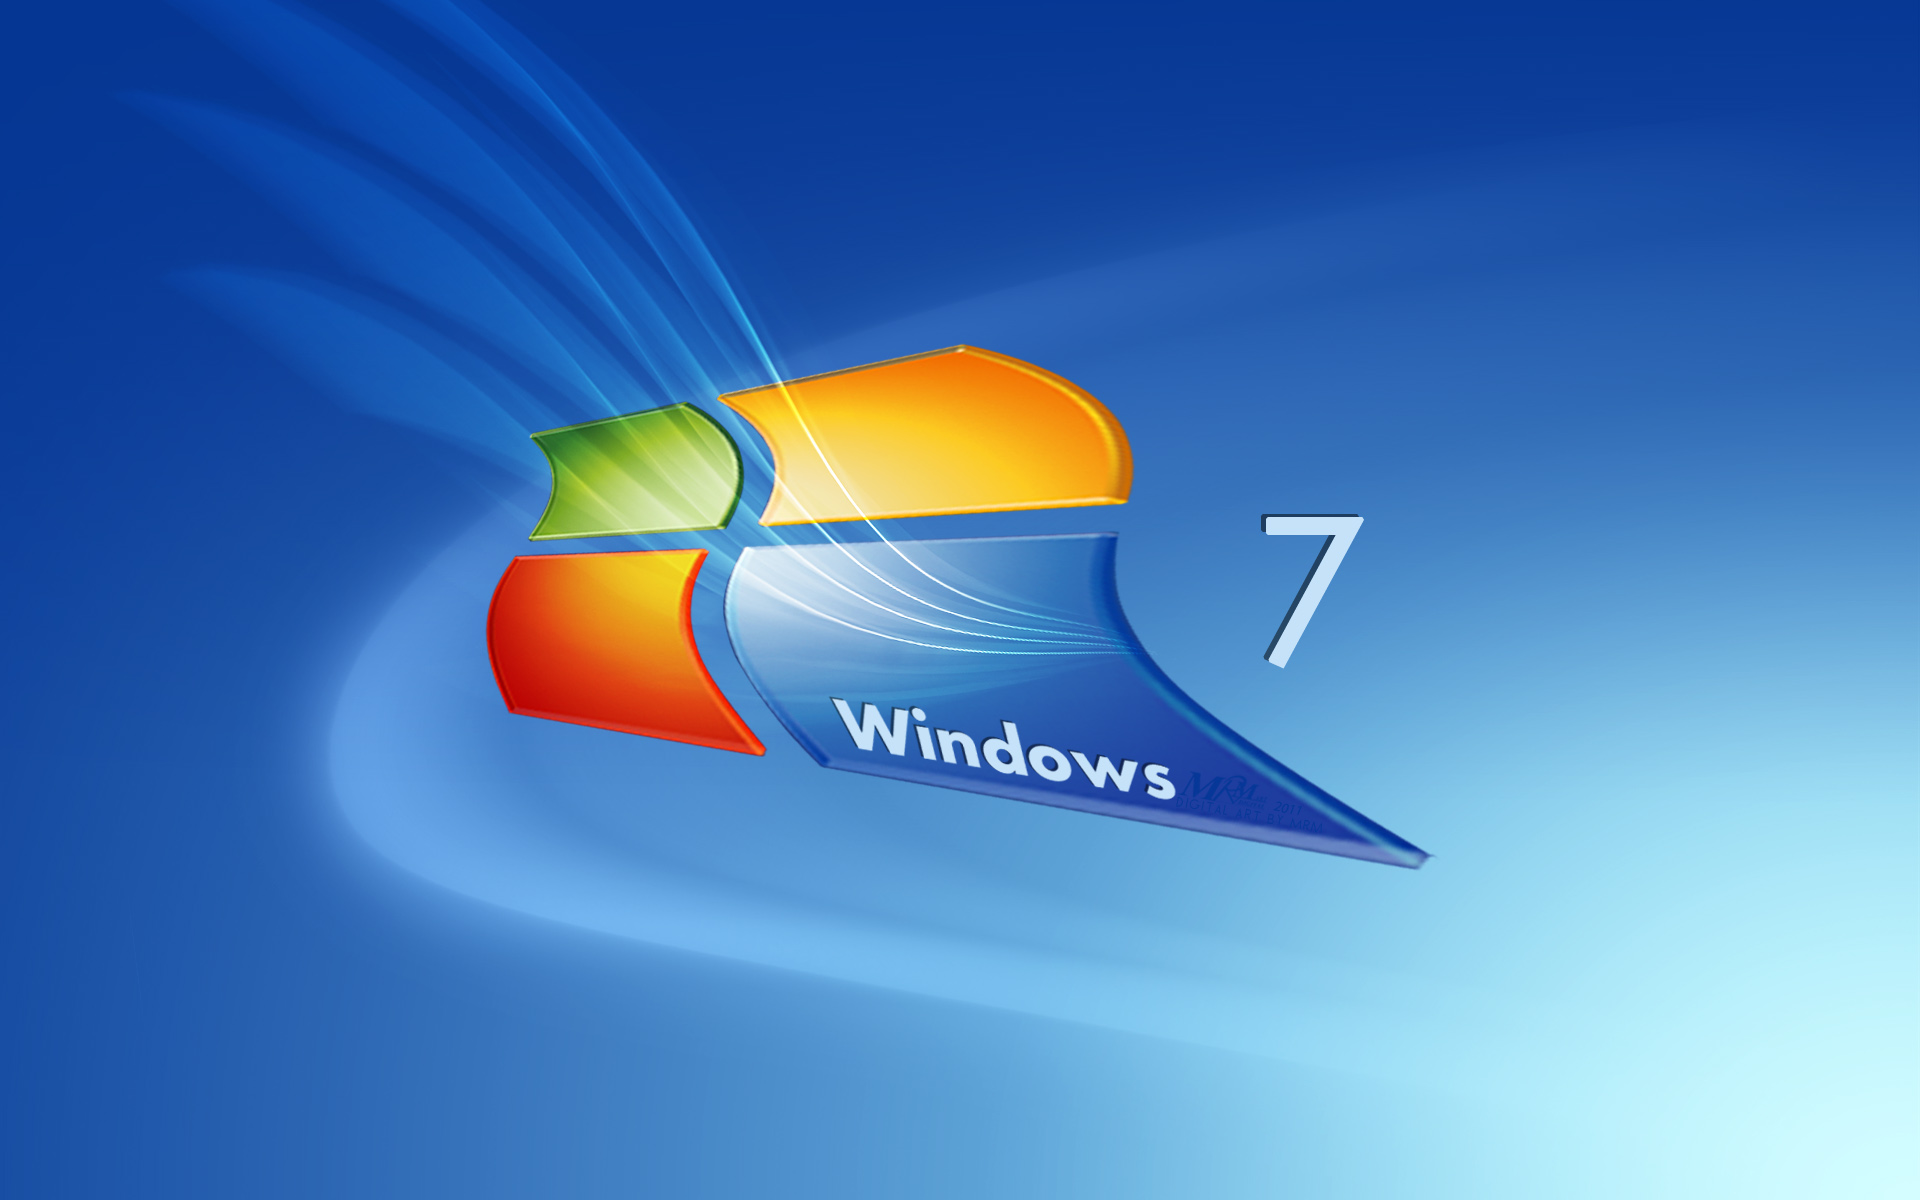 Wallpaper Windows 7 Ultimate Hd 3d For Laptop Image Num 84